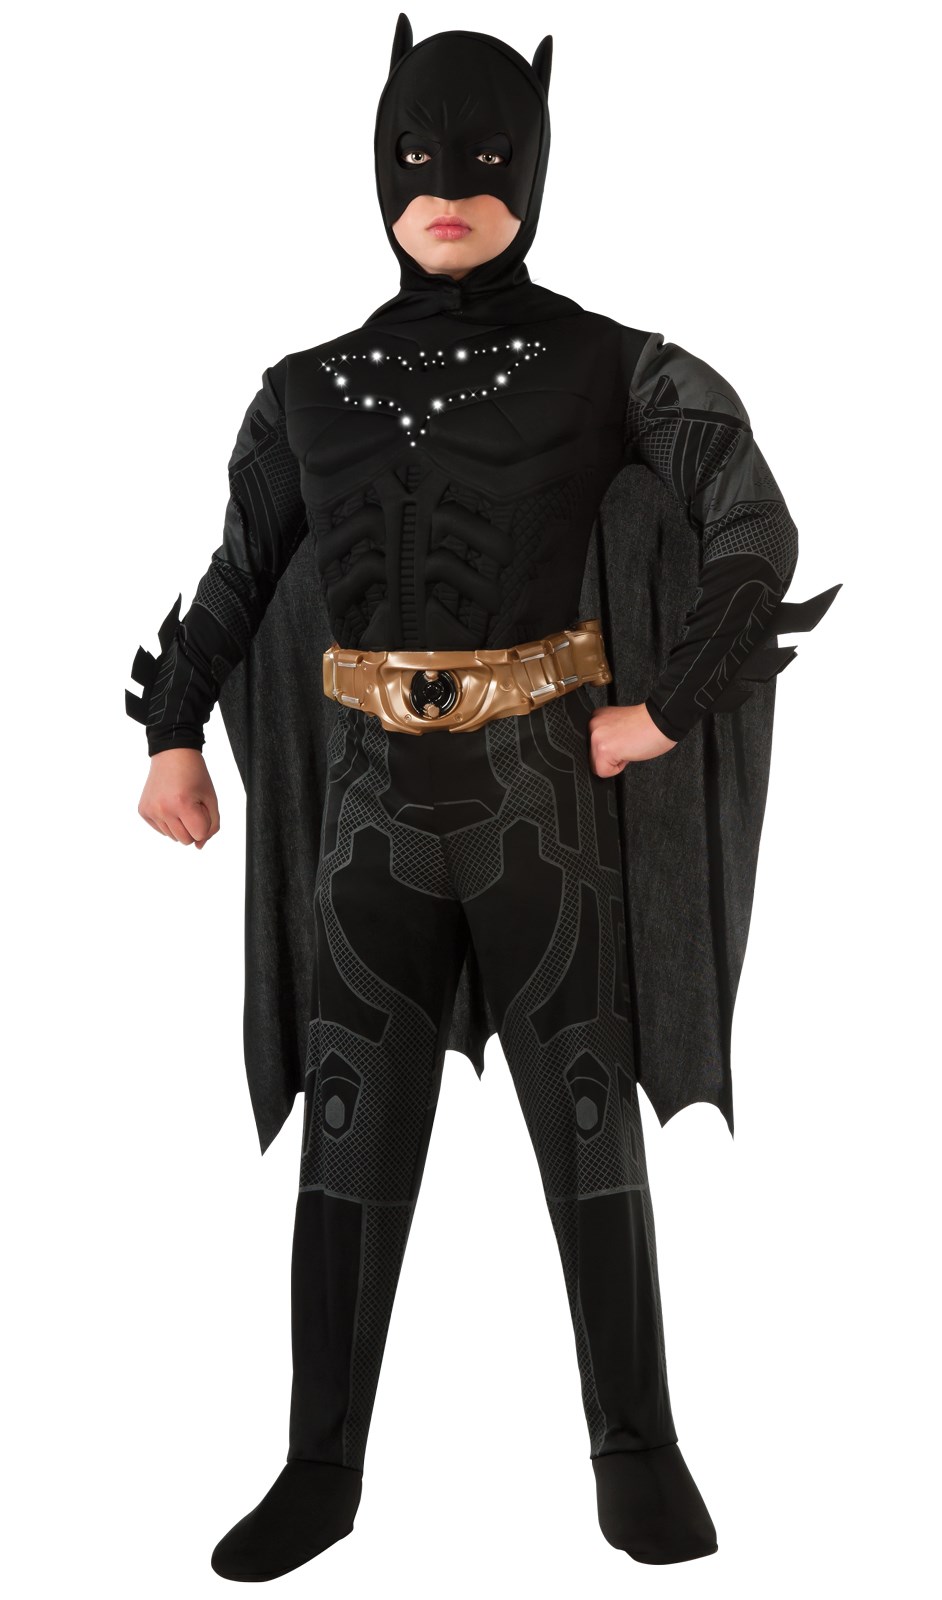 The Dark Knight Rises Batman Light-Up Kids Costume | BirthdayExpress.com